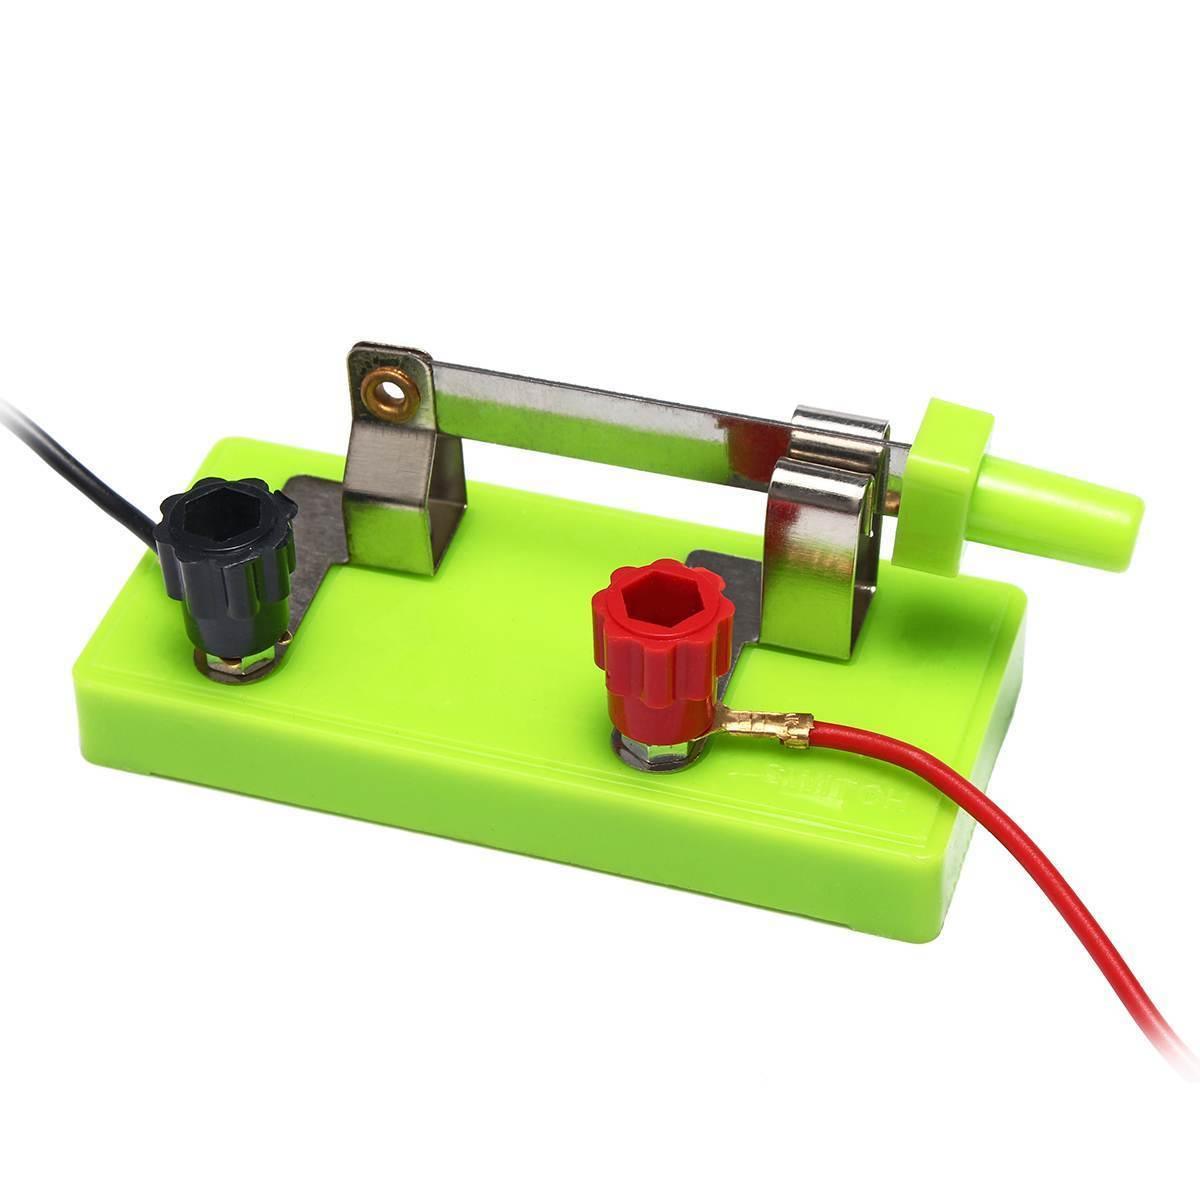 Basic Electric Circuit Learning STEM Toys - Stylus Kids